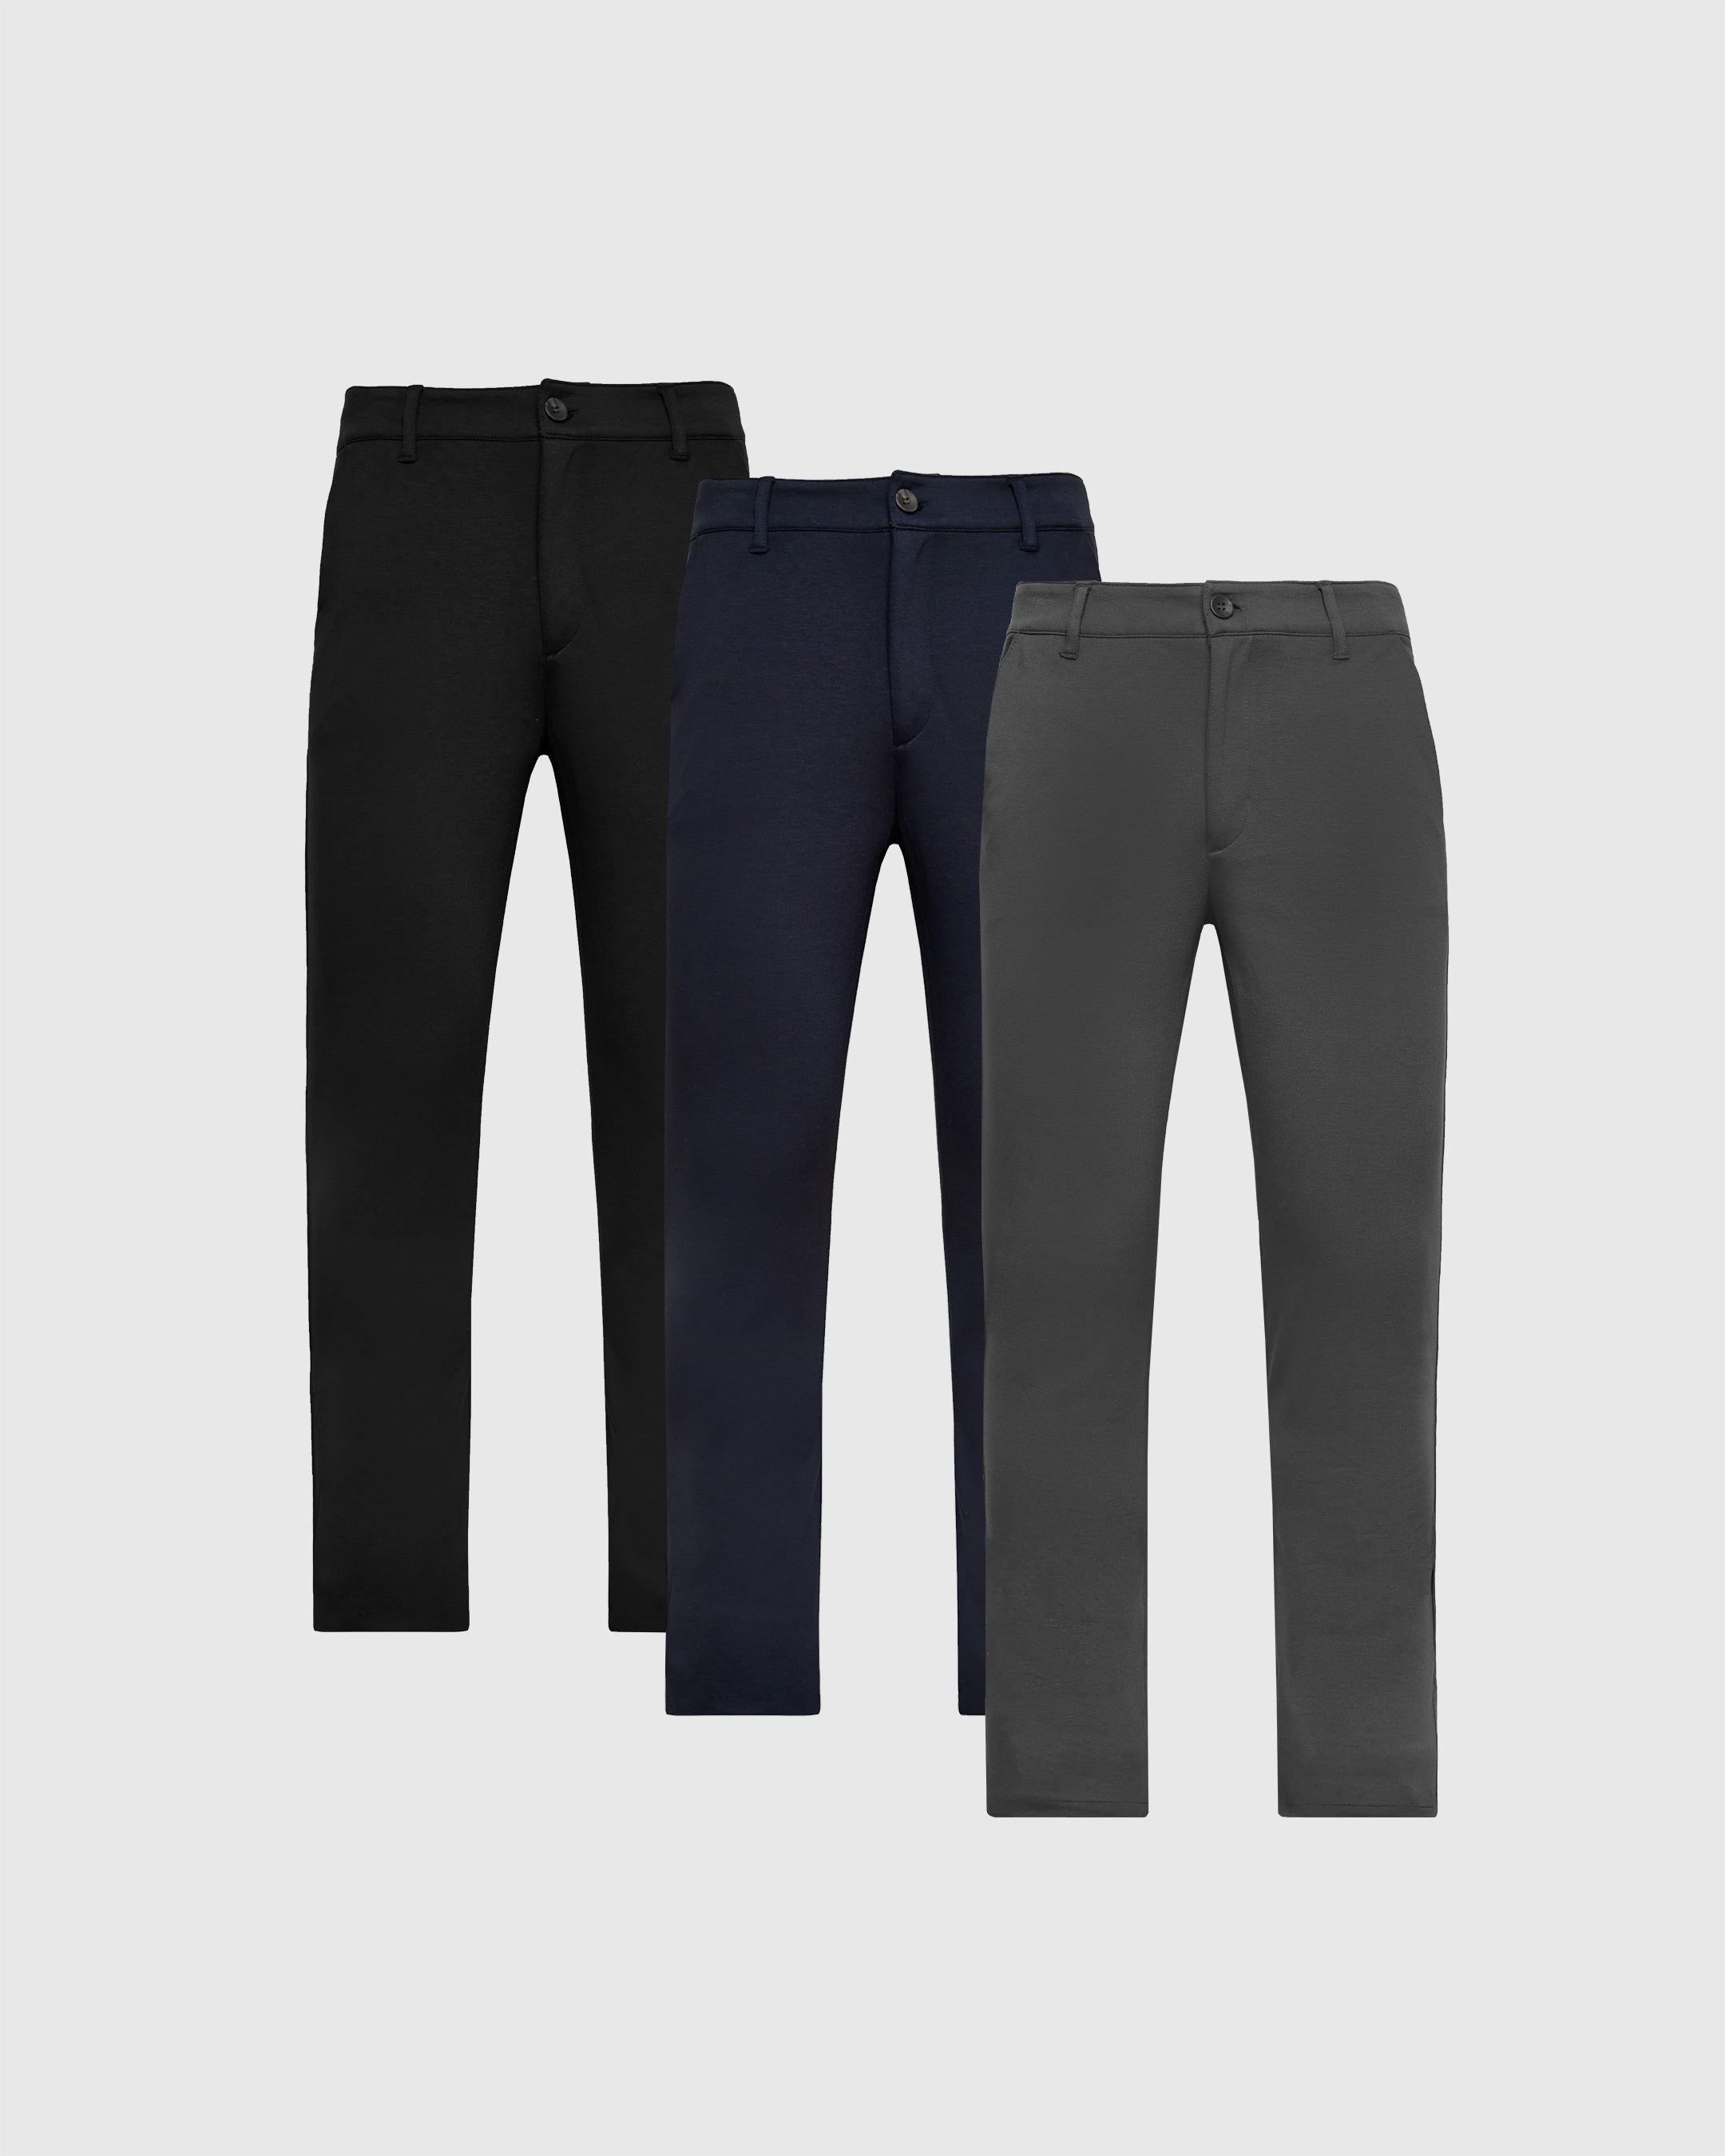 Carbon Comfort Chino Pants – True Classic